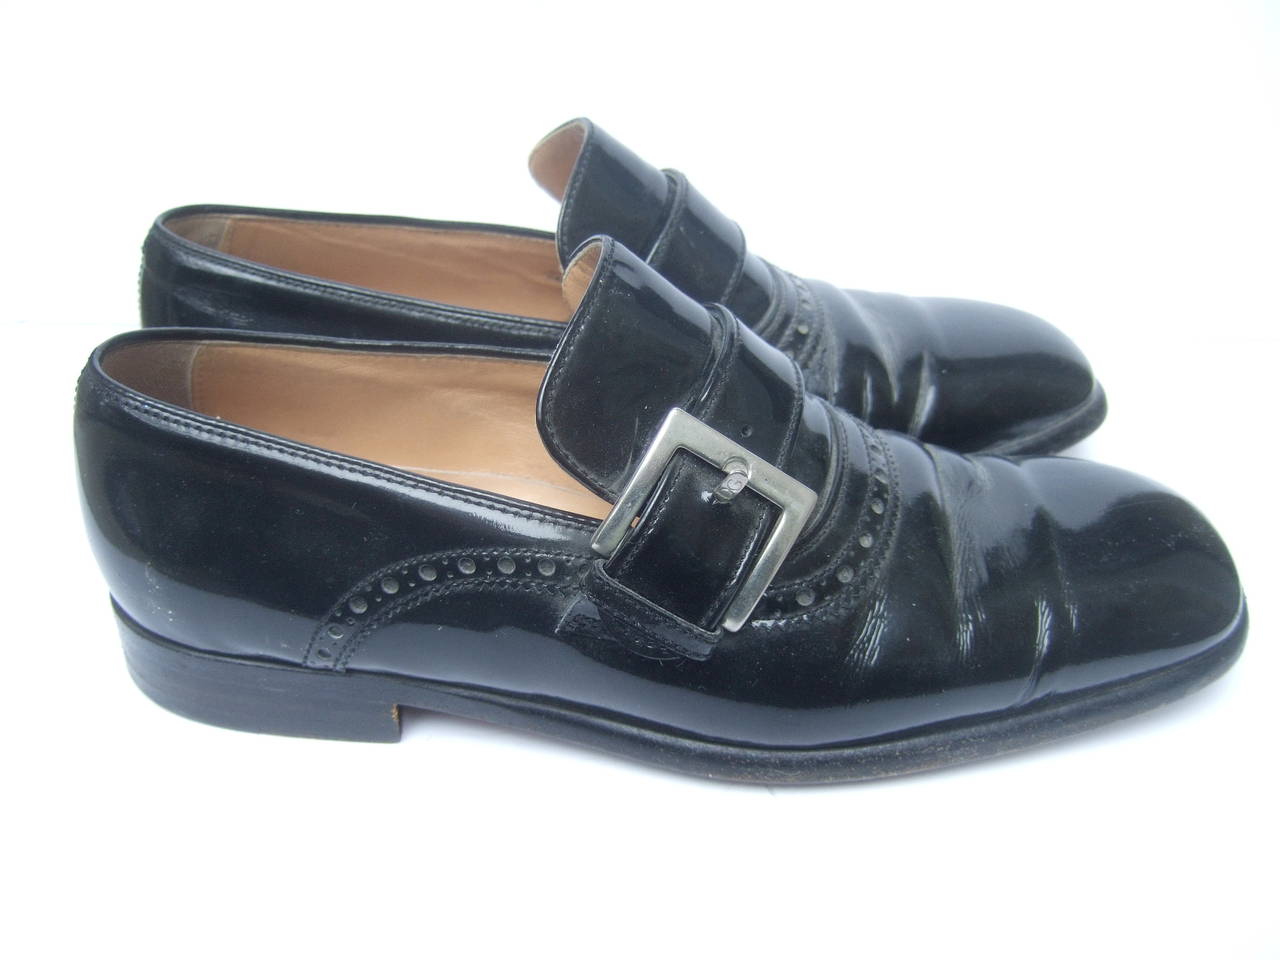 Dolce & Gabbana Men's Black Patent Leather Shoes US Size 8 For Sale 1